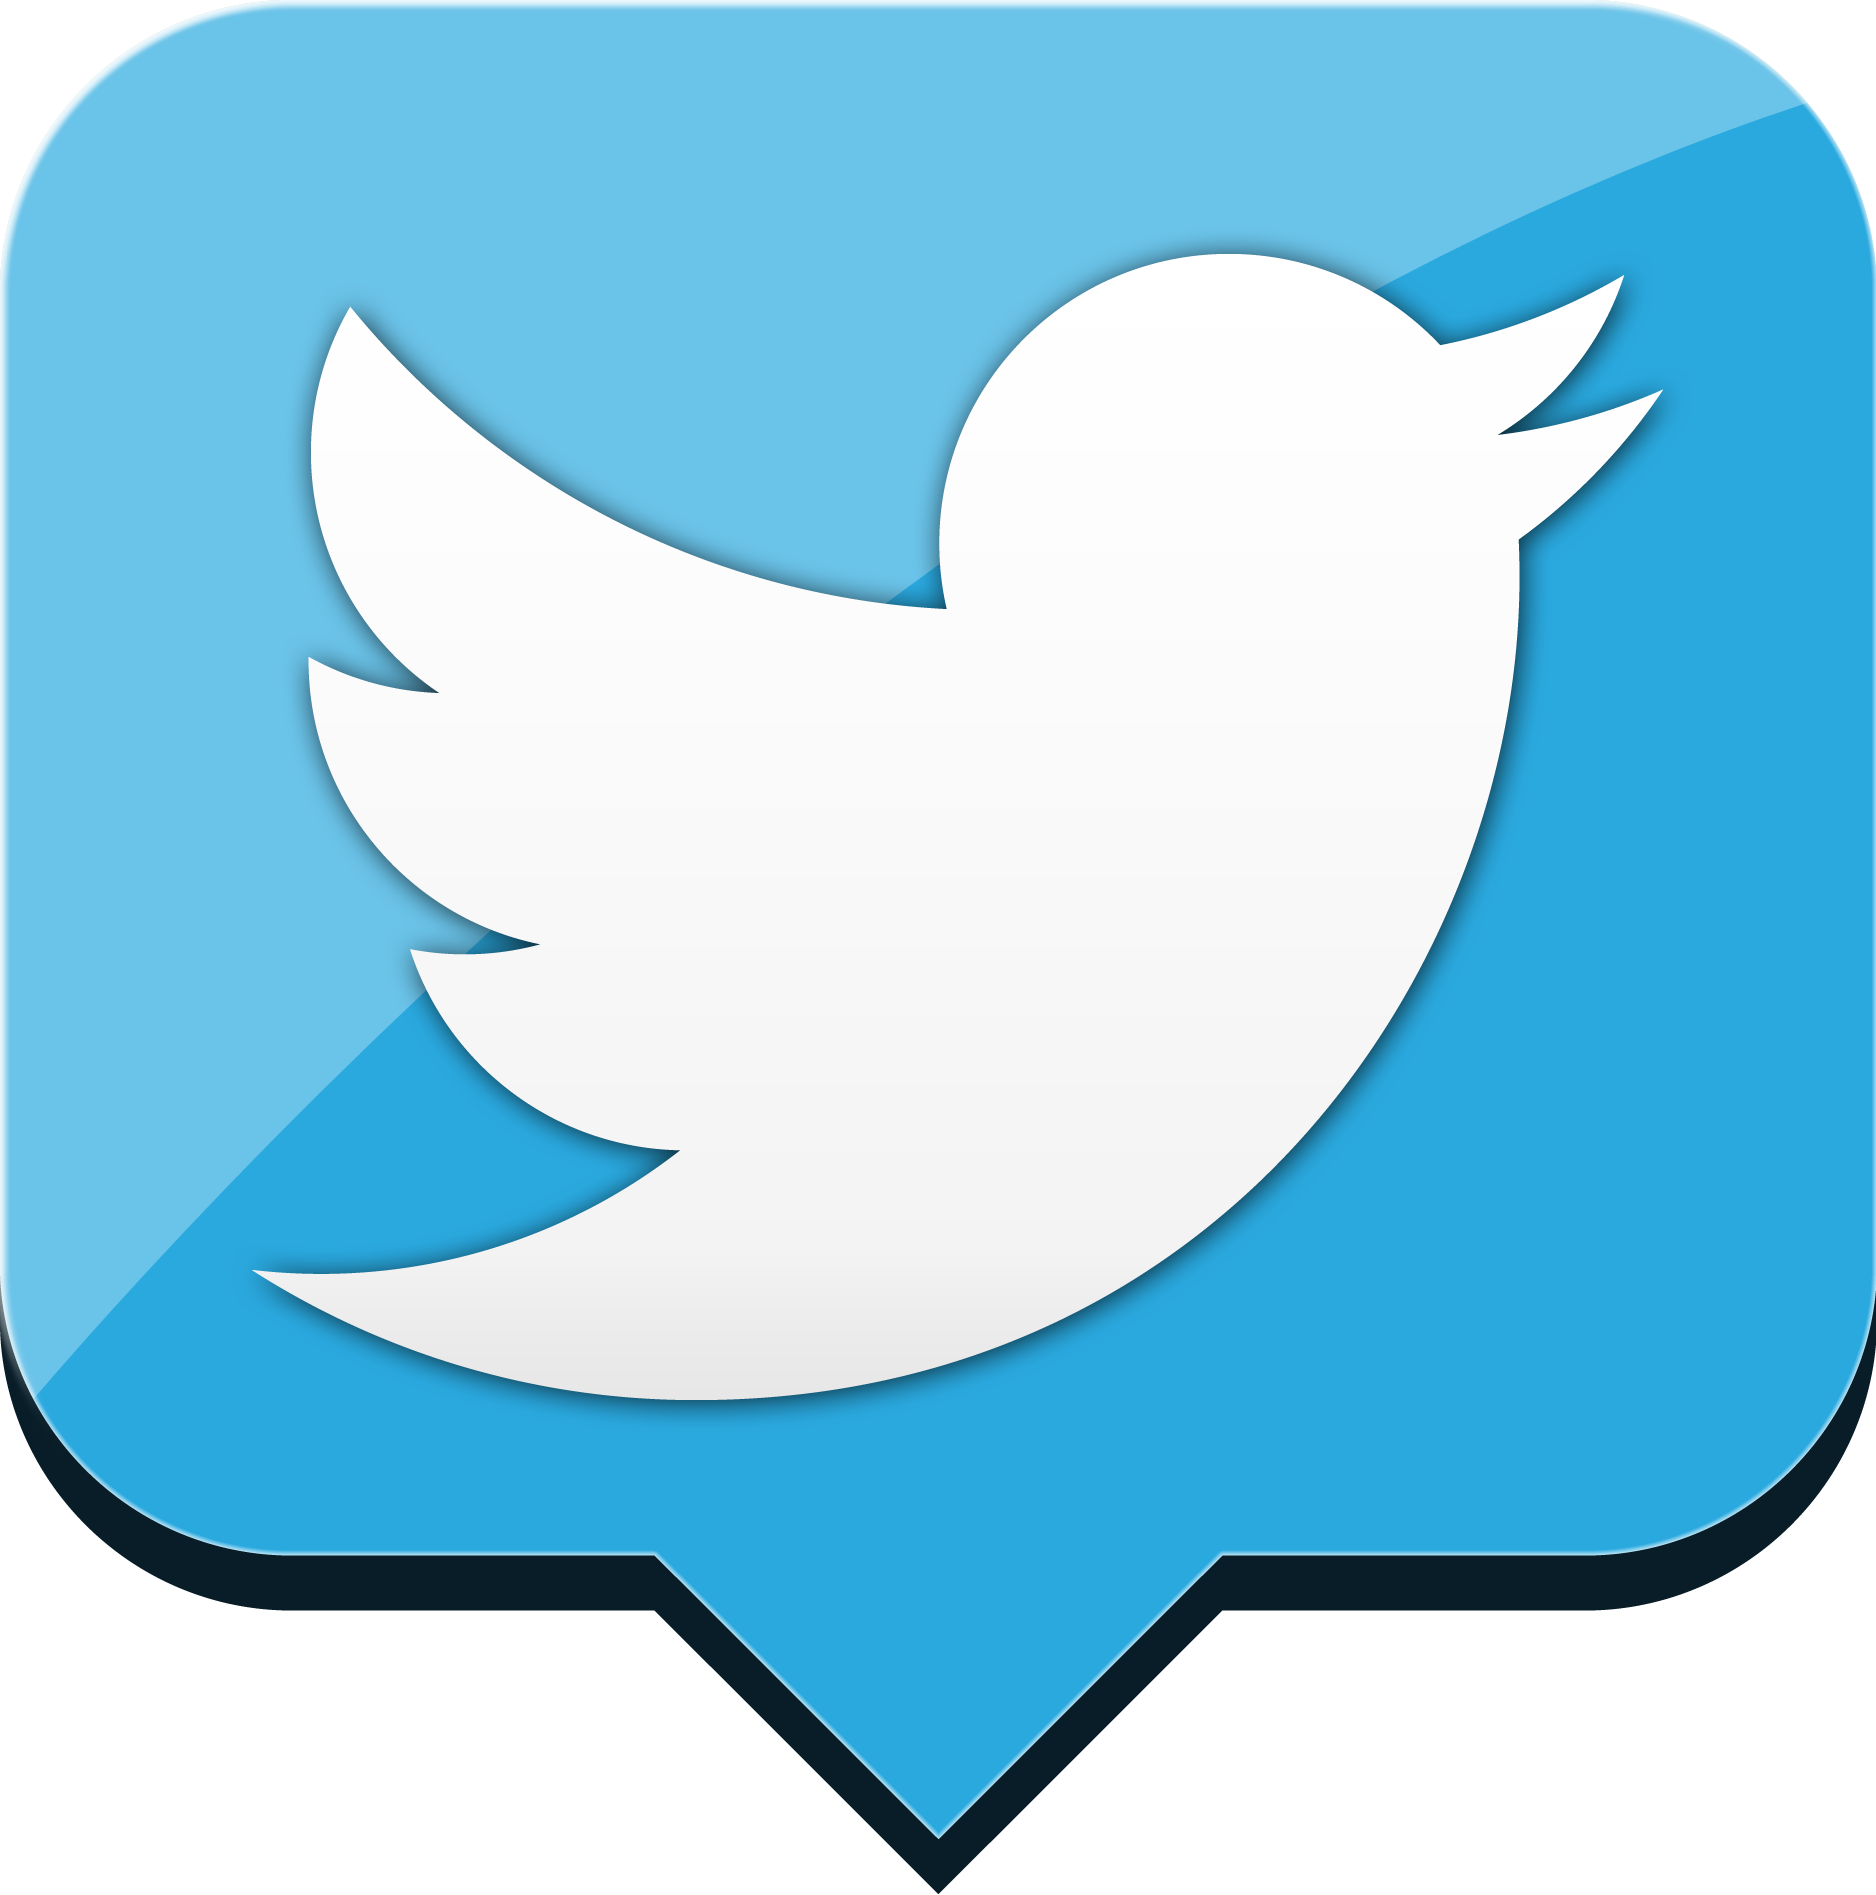 Twitter web. Твиттер. Значок твиттера. Логотип Твиттер. Твибер.